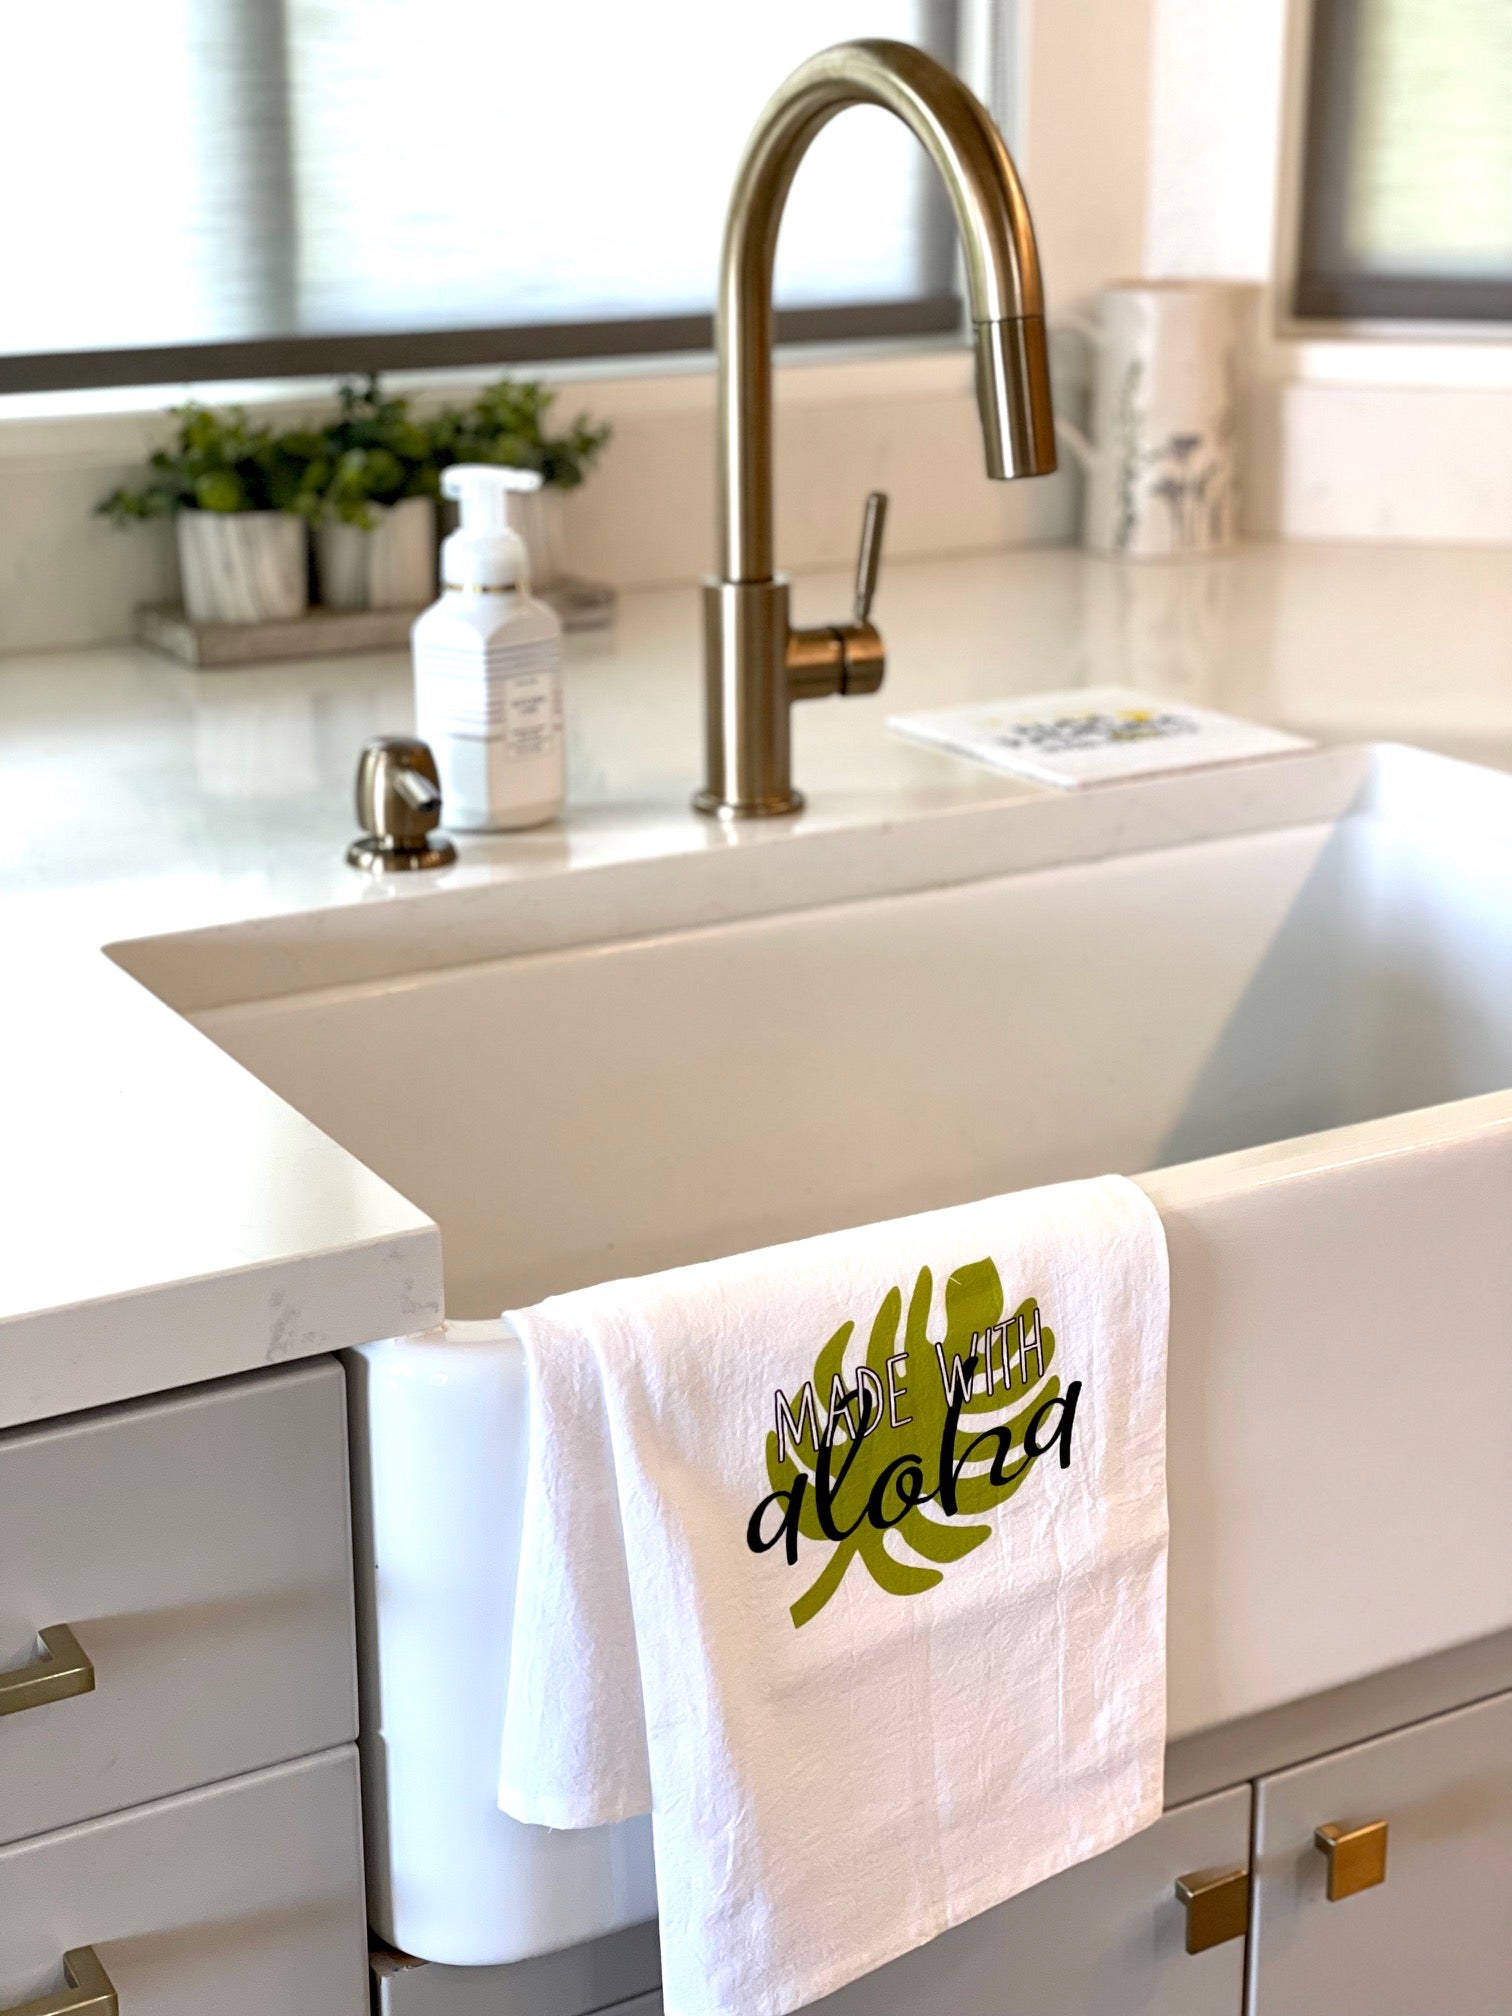 Pop-Up Mākeke - Sal Terrae - Flour Sack Kitchen Towel - Made with Aloha - Green Monstera - In Use